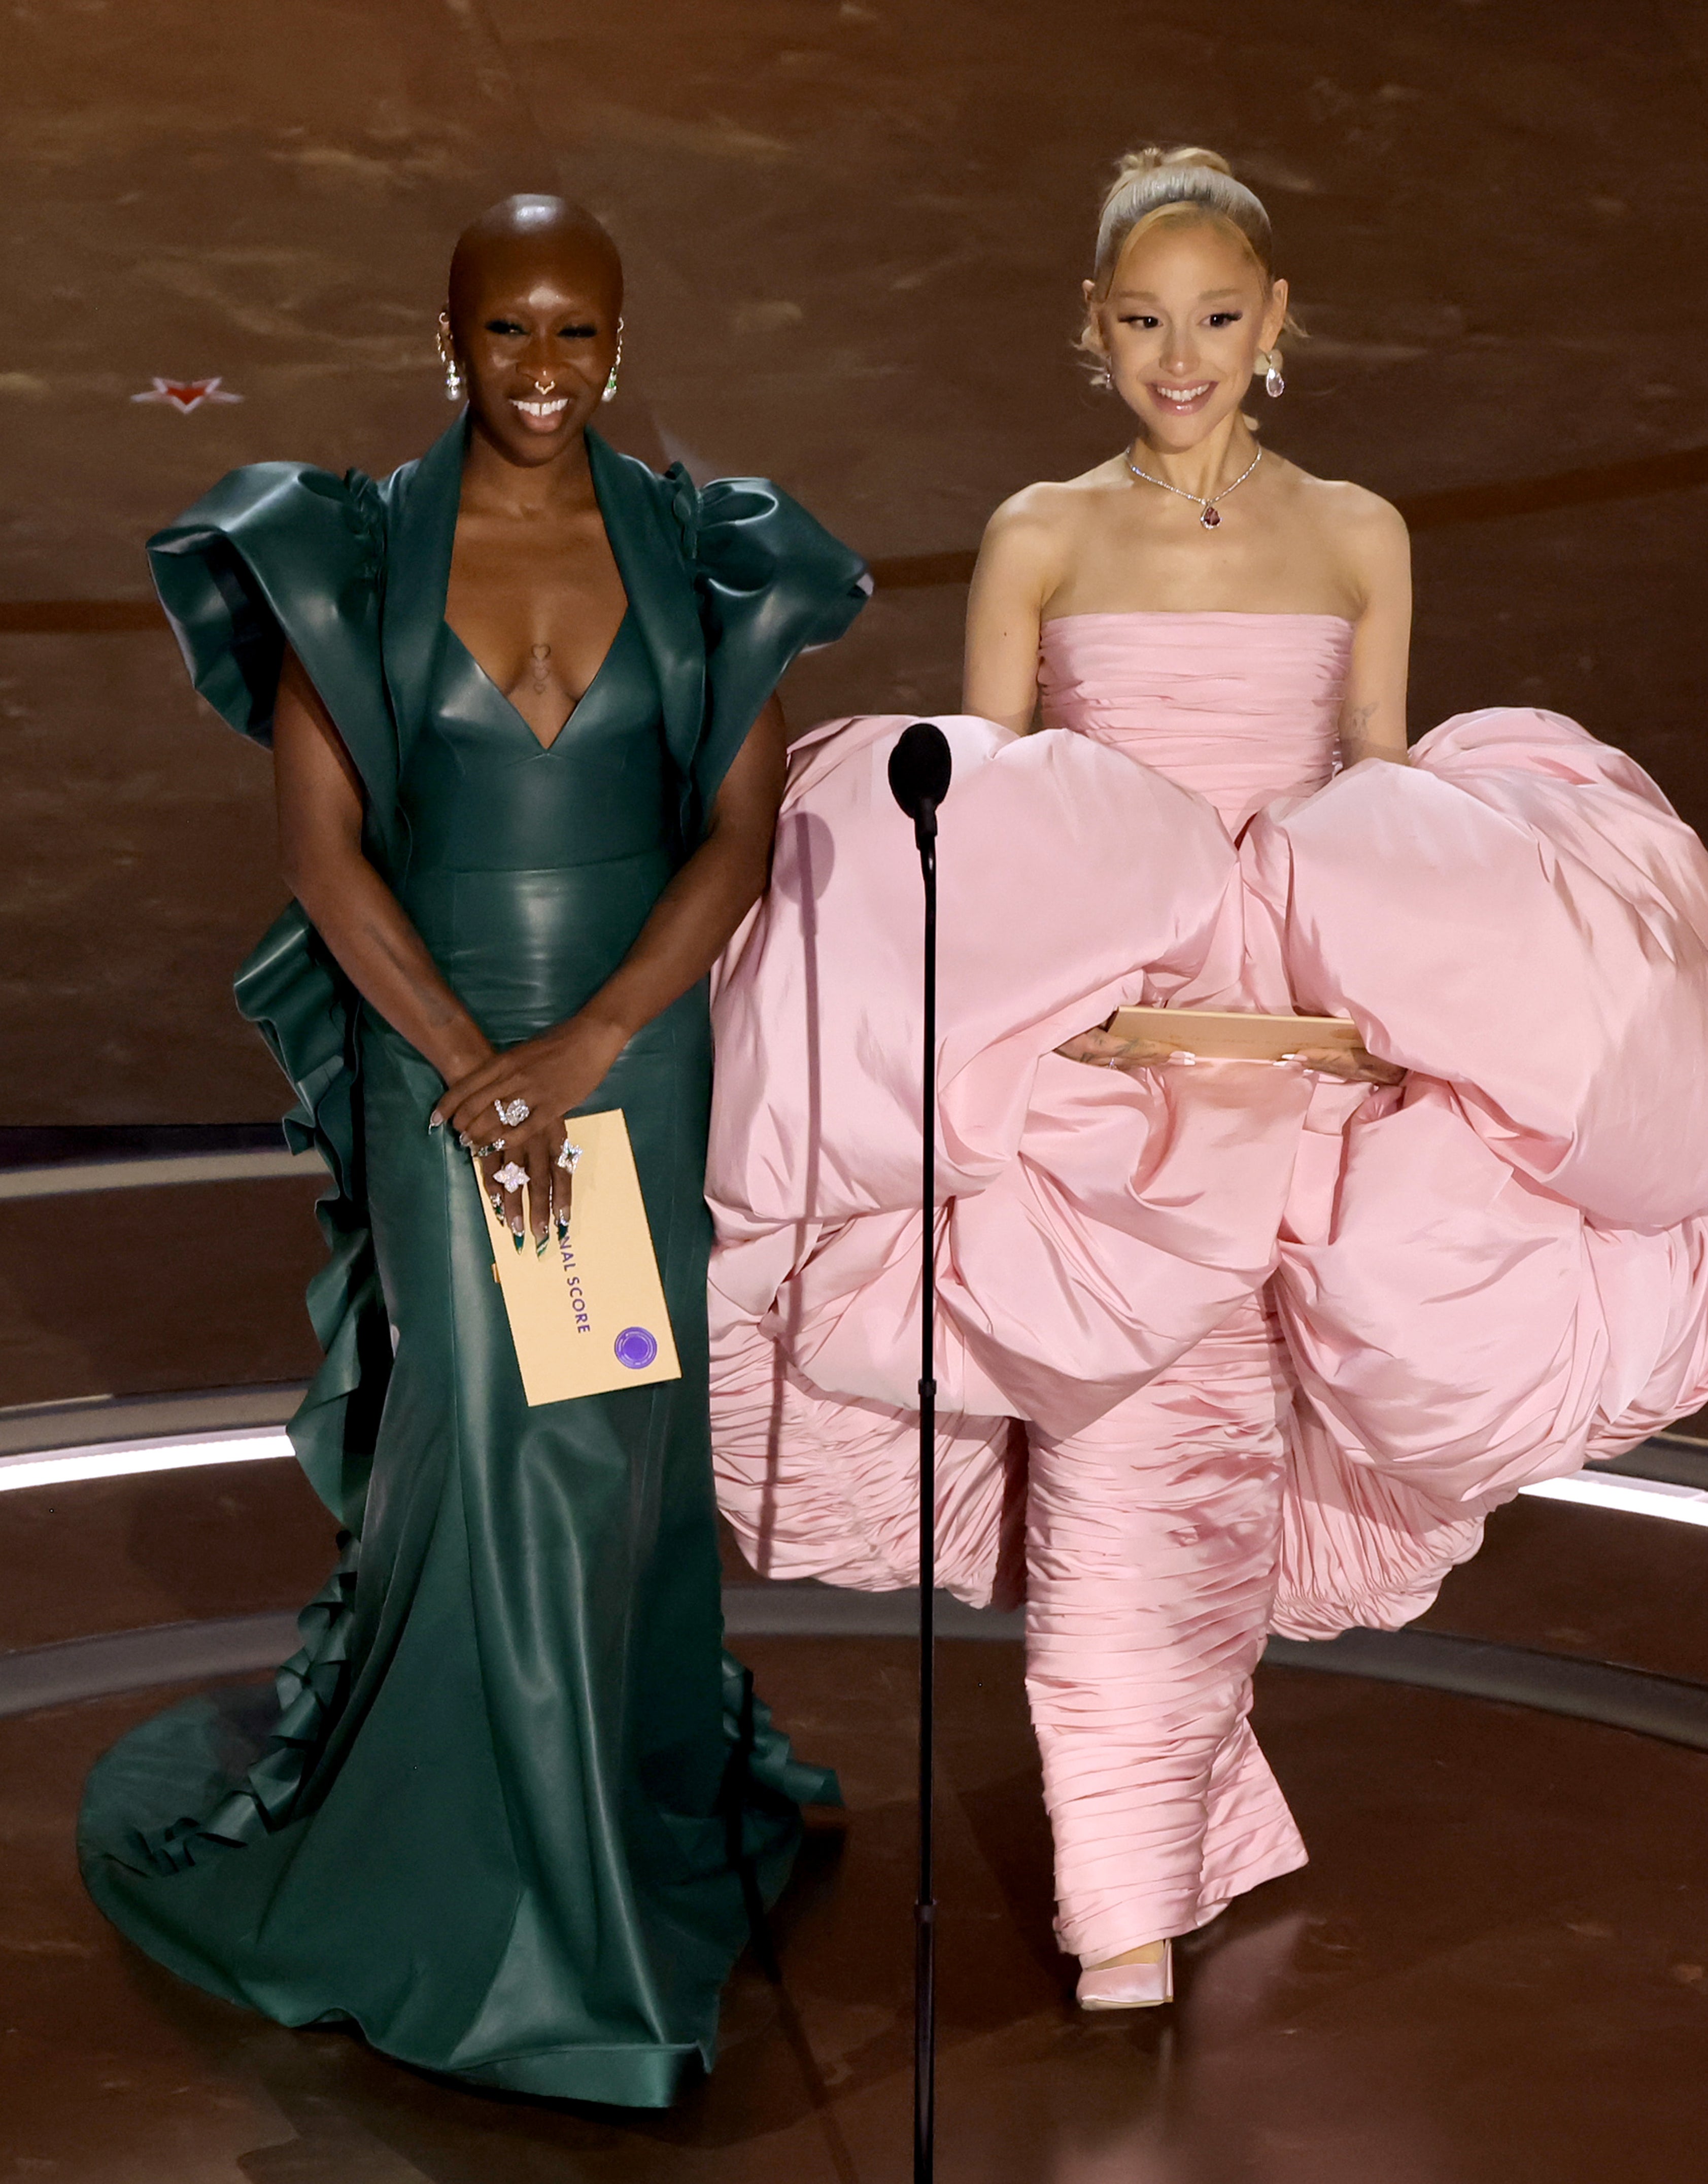 Cynthia Erivo and Ariana Grande onstage at the Oscars presenting an award